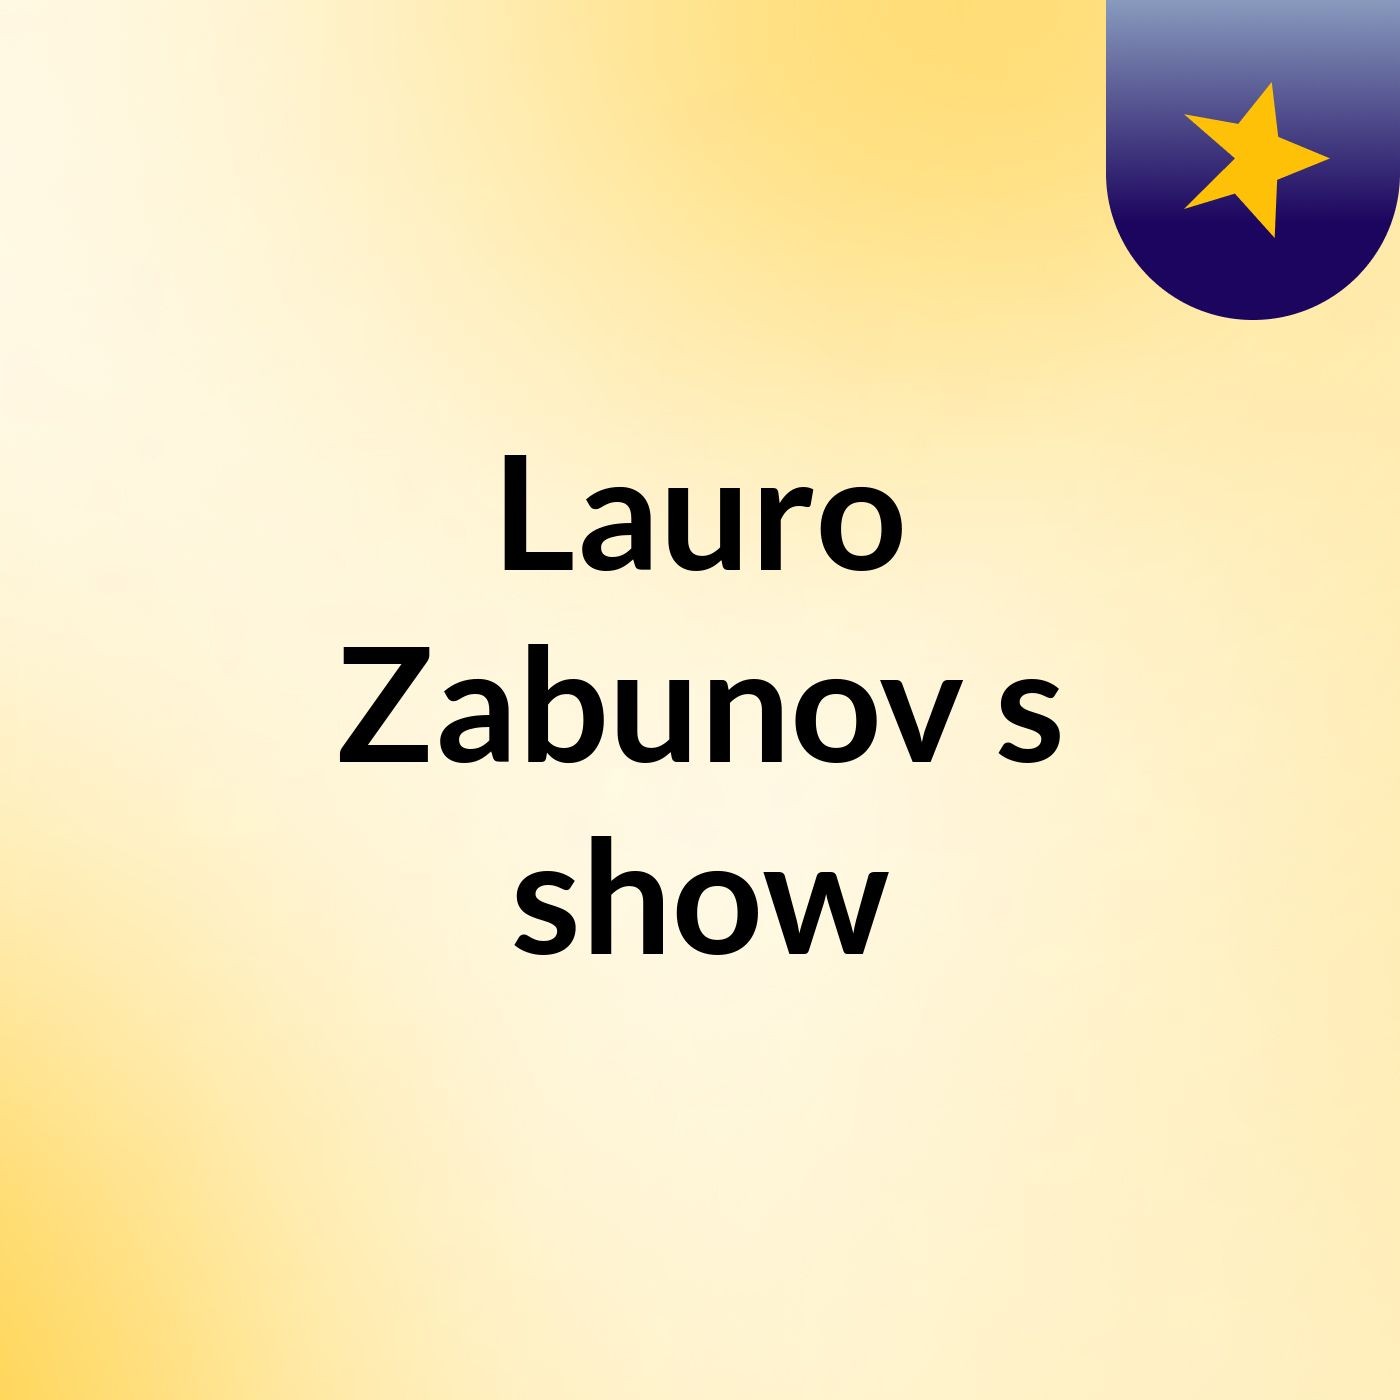 Lauro Zabunov's show